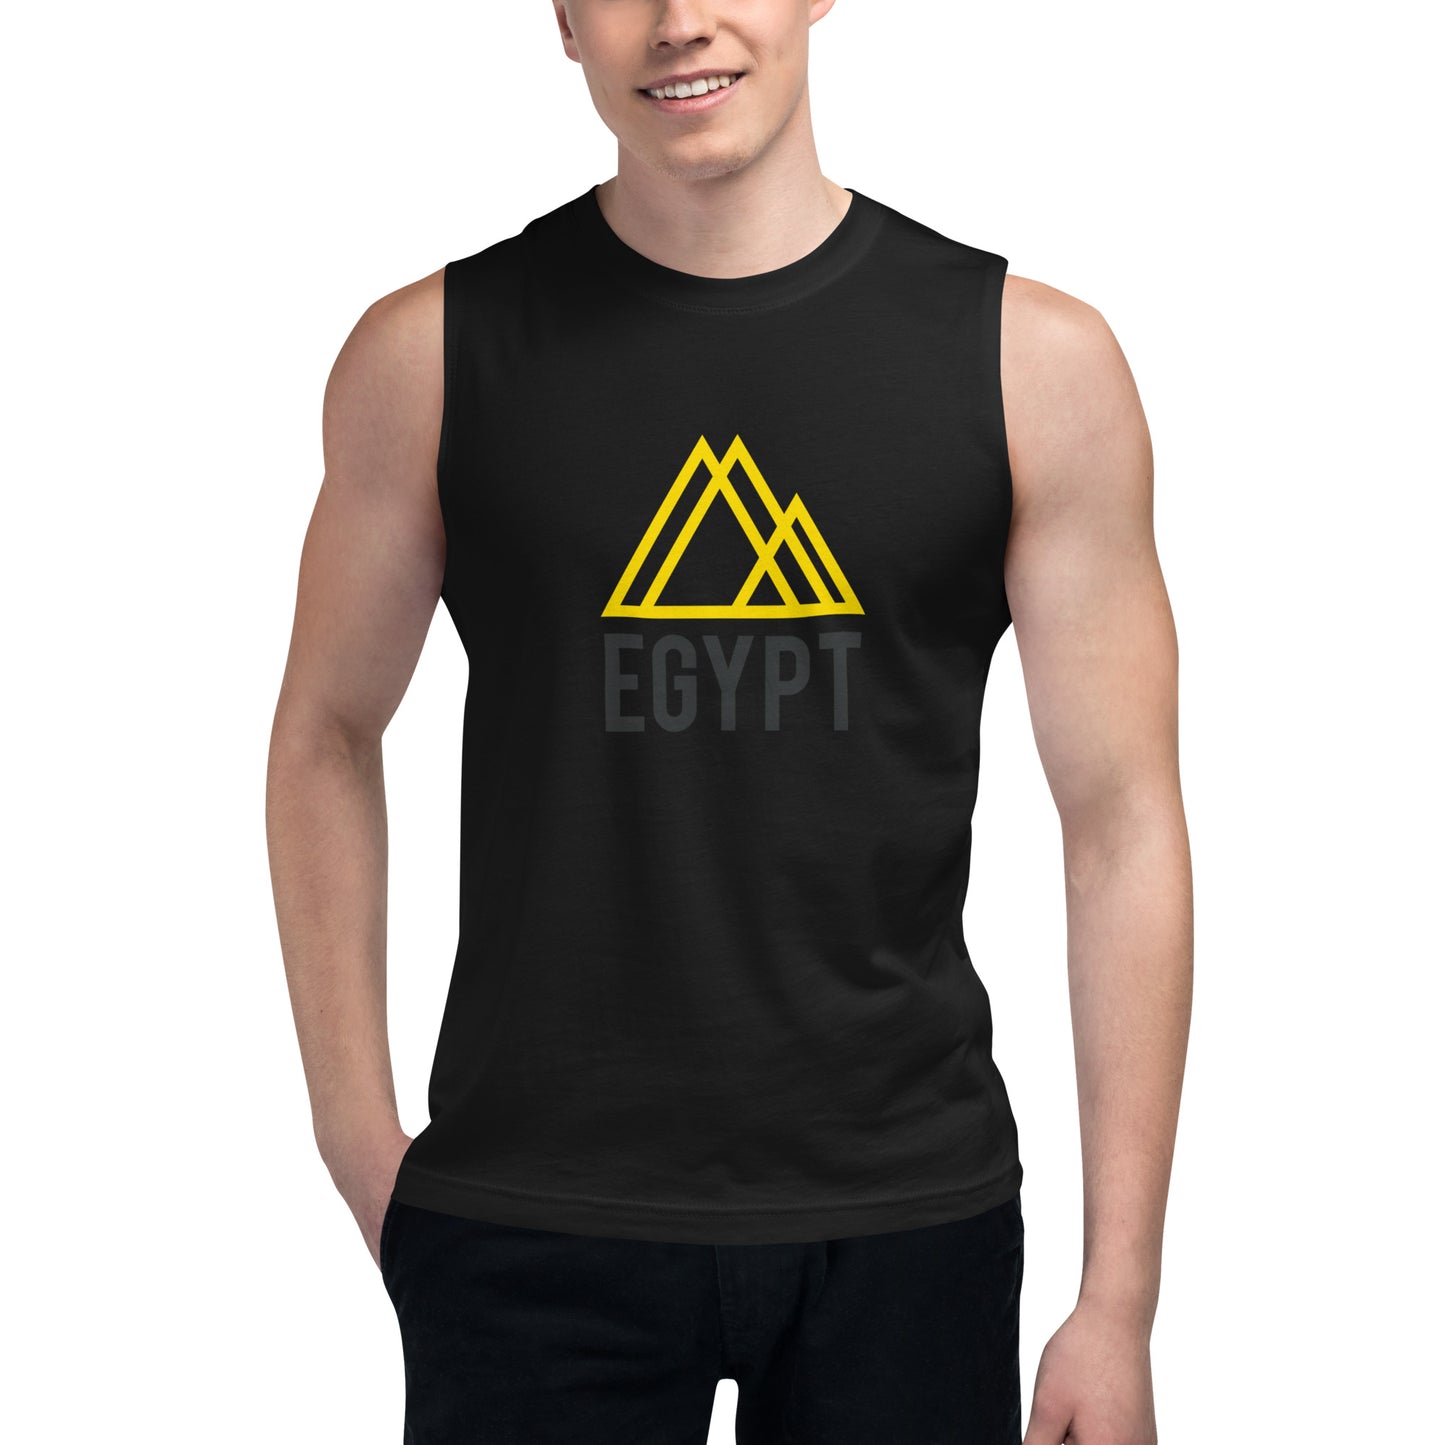 EGYPT Muscle Shirt